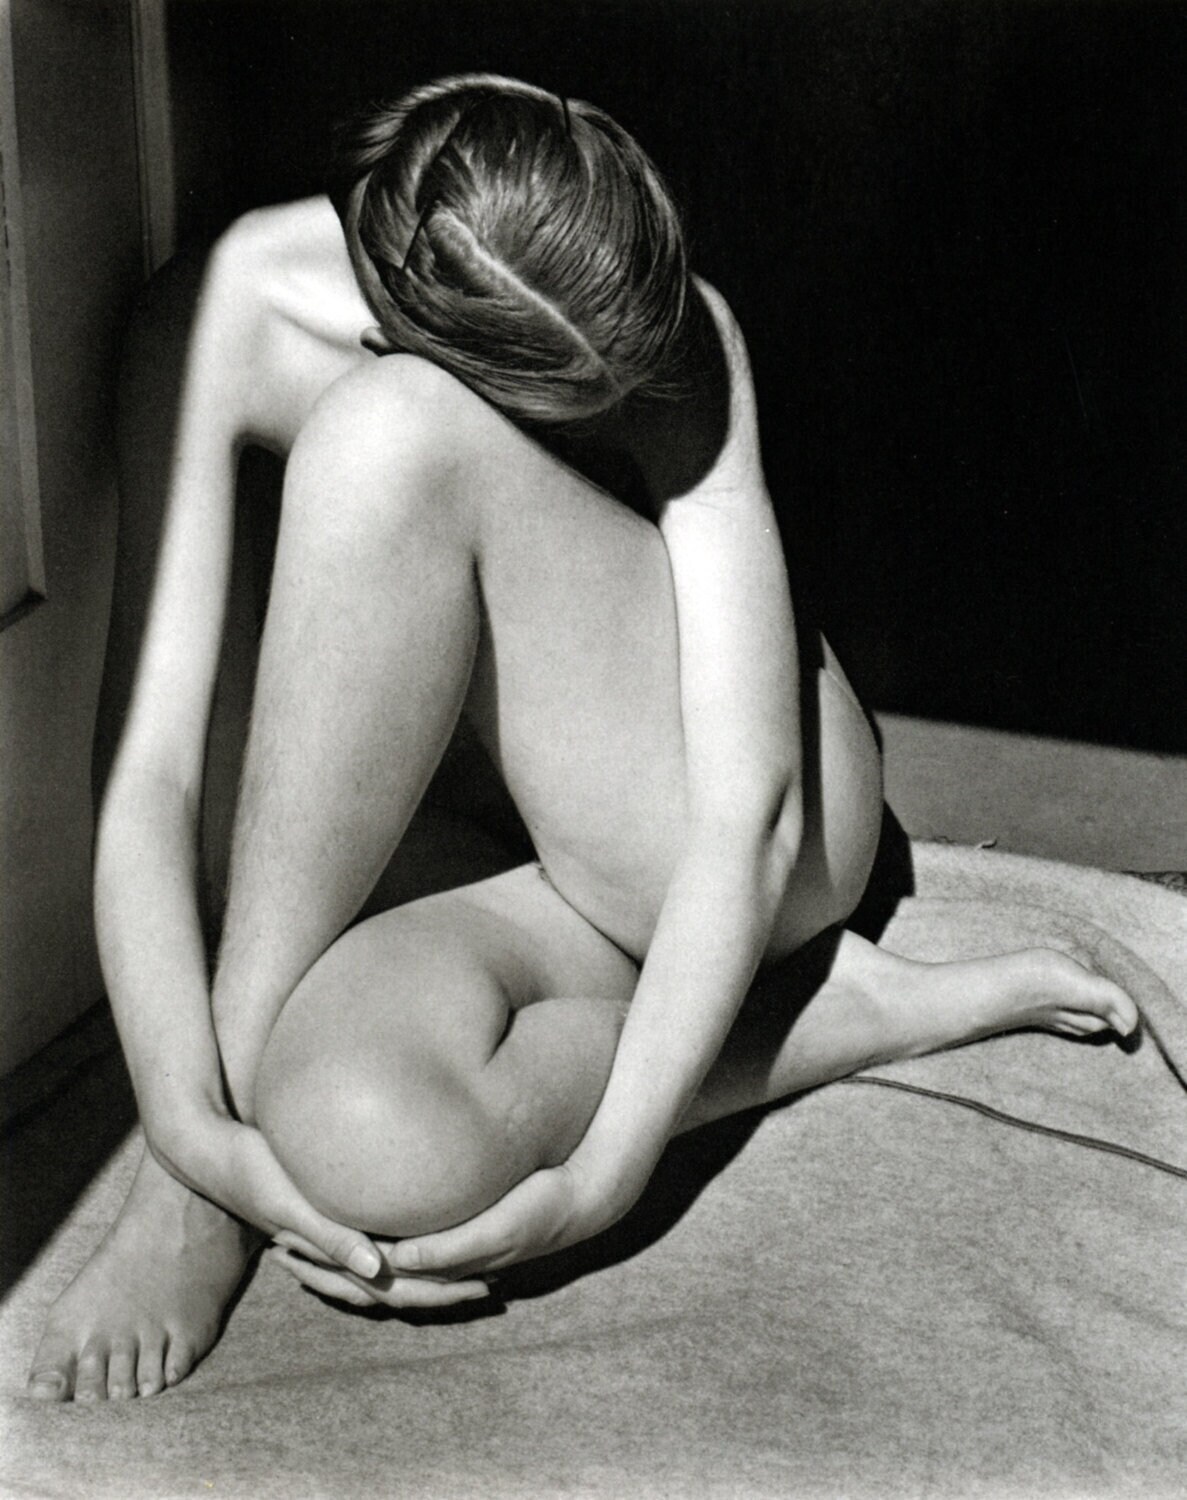 Vintage Nude: Stunning Shots of Tres Vieille Women